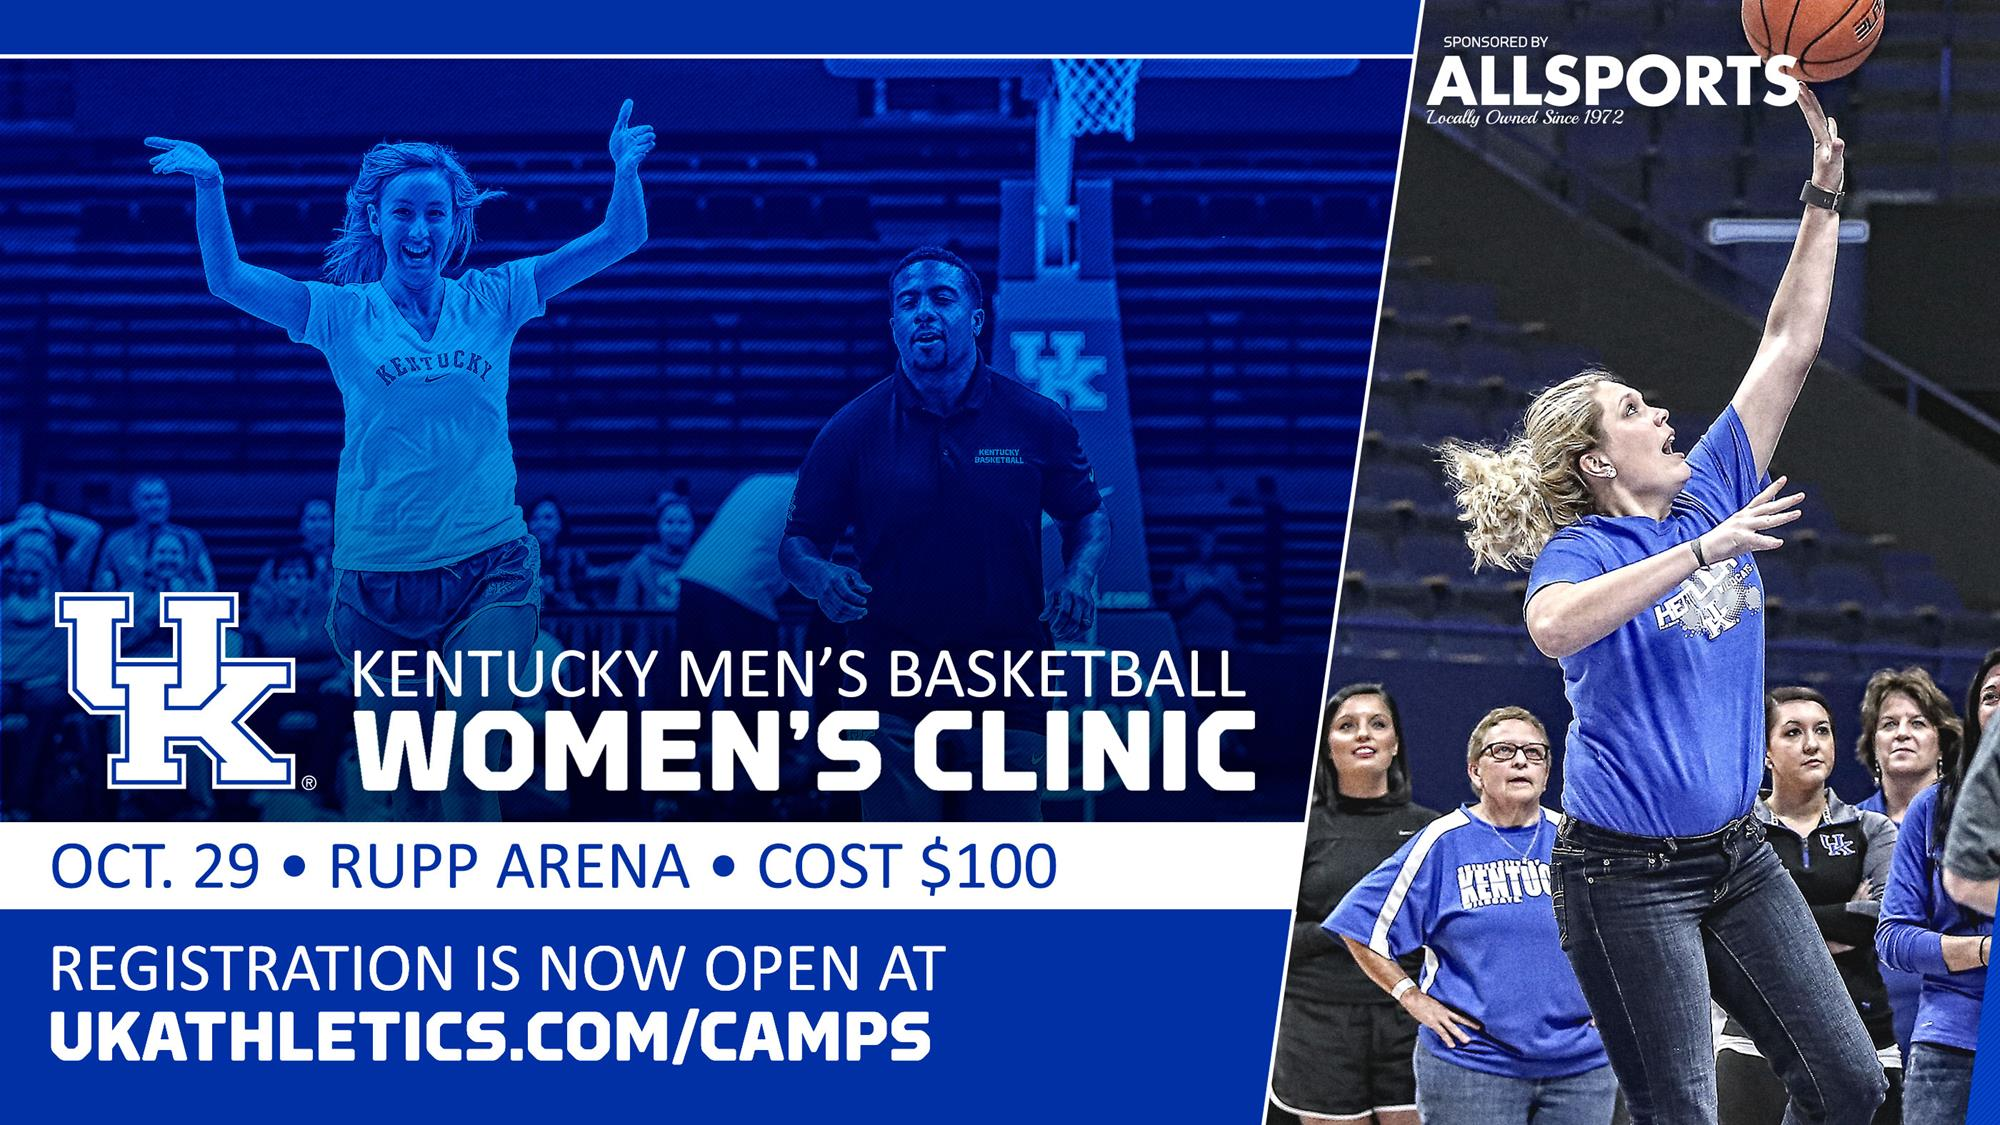 2017 John Calipari Women’s Clinic Set for Oct. 29 in Rupp Arena